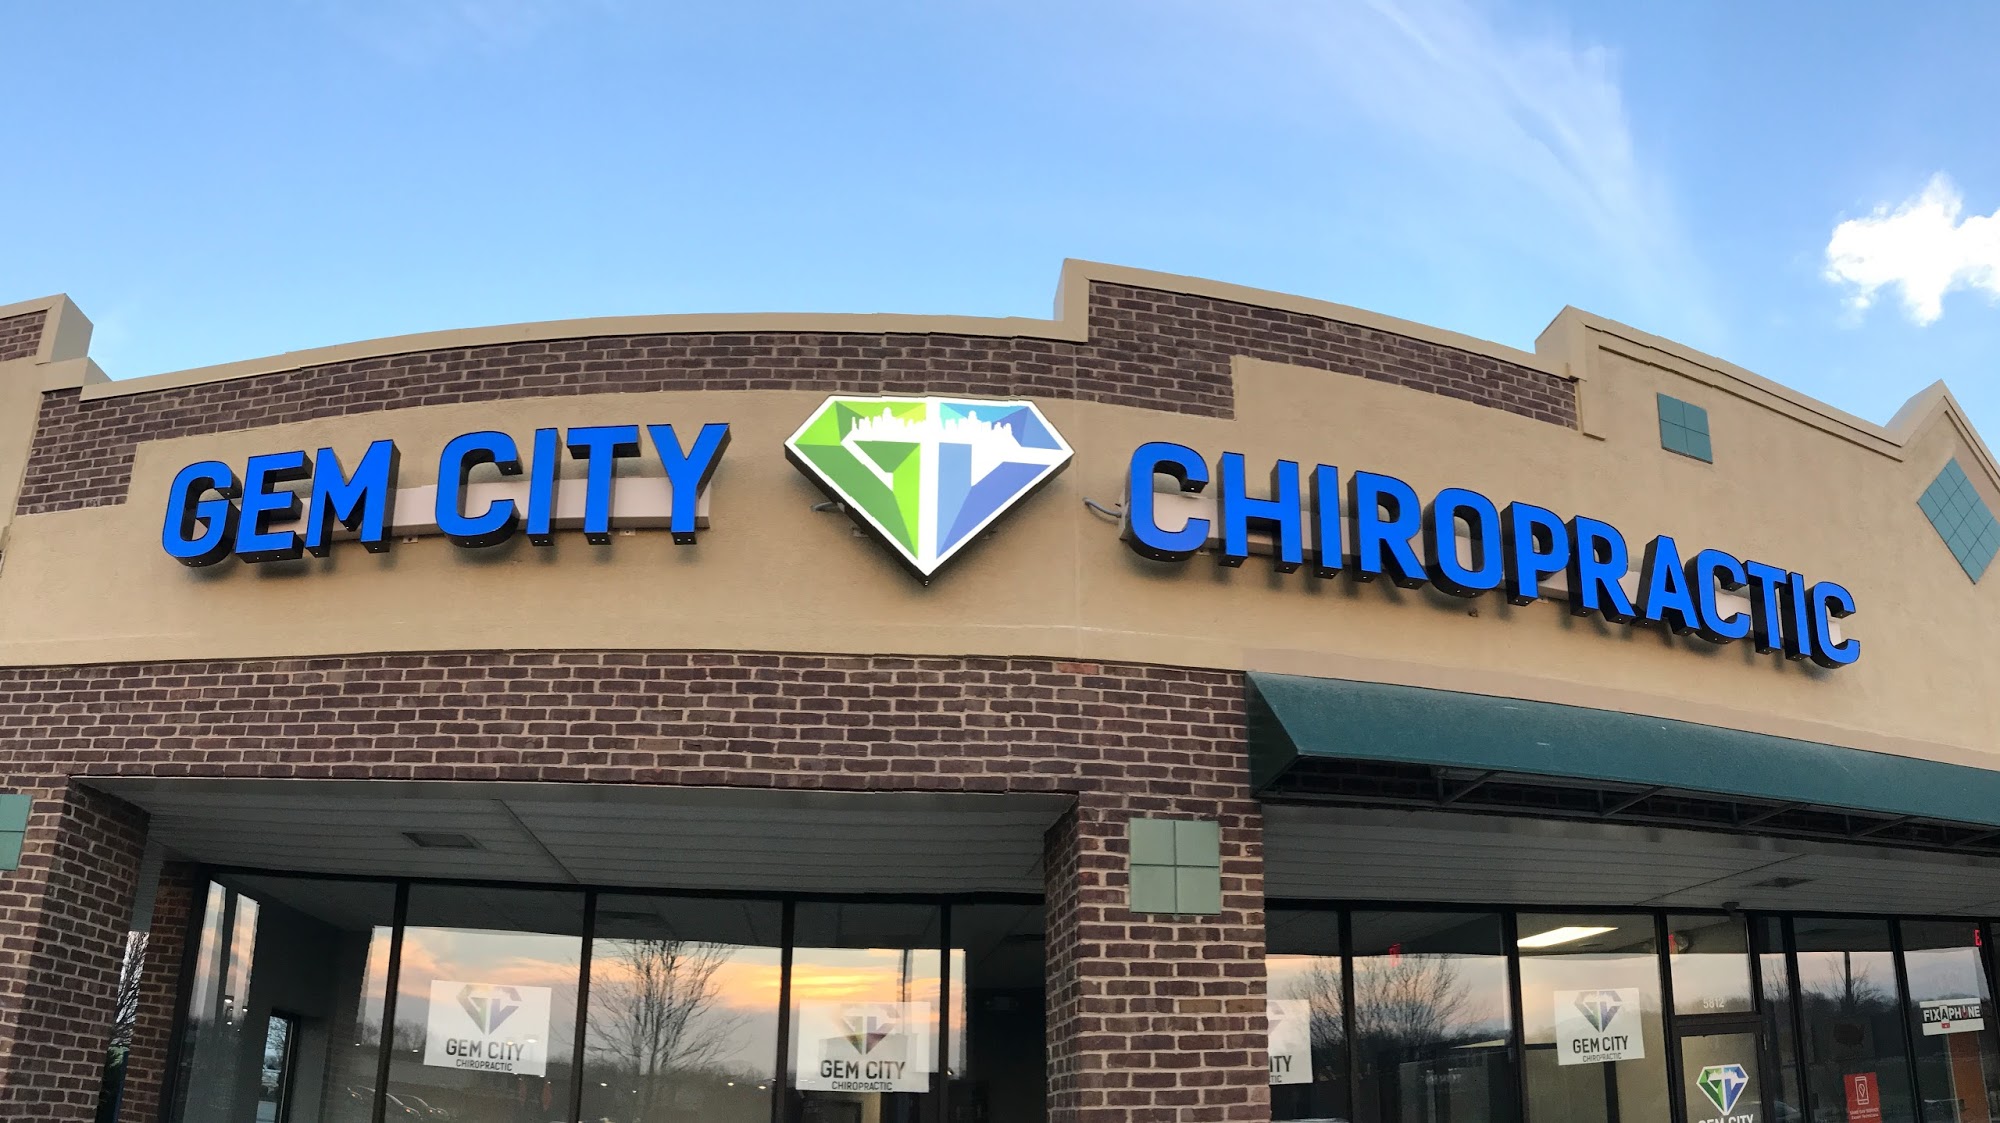 Gem City Chiropractic